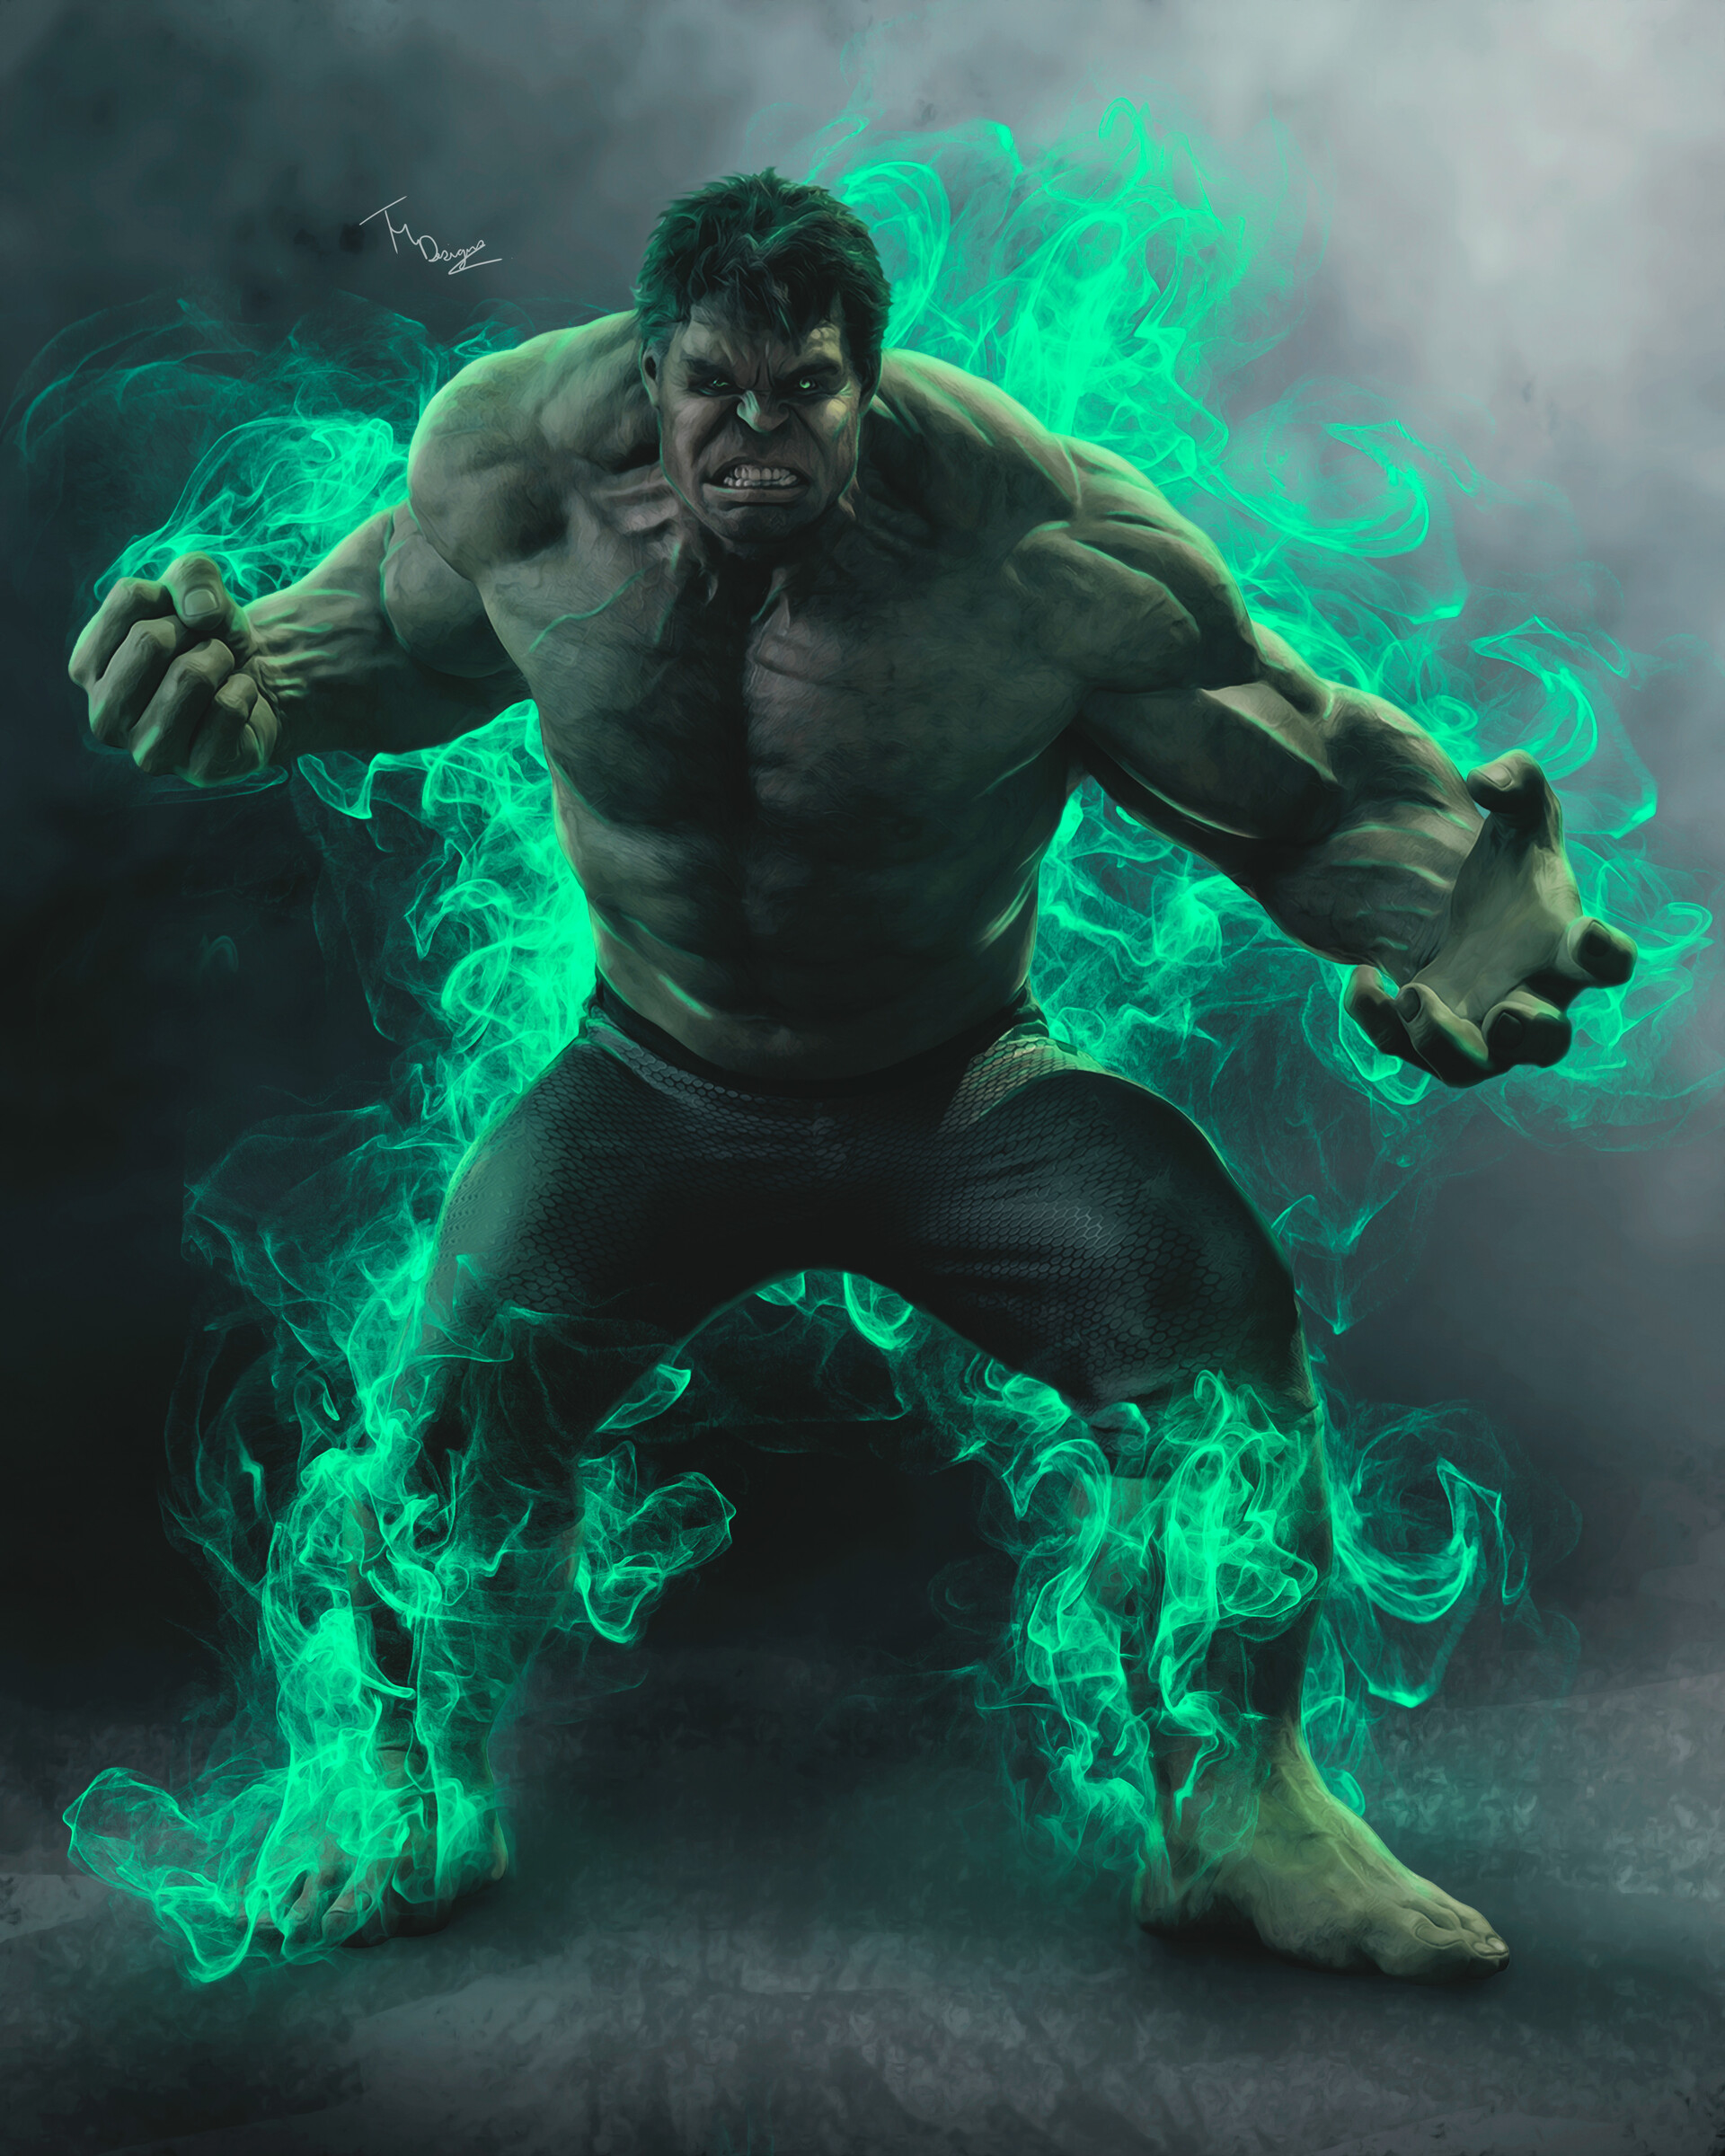 Hulk Smash 4k Wallpaper, HD Superheroes 4K Wallpapers, Images and  Background - Wallpapers Den